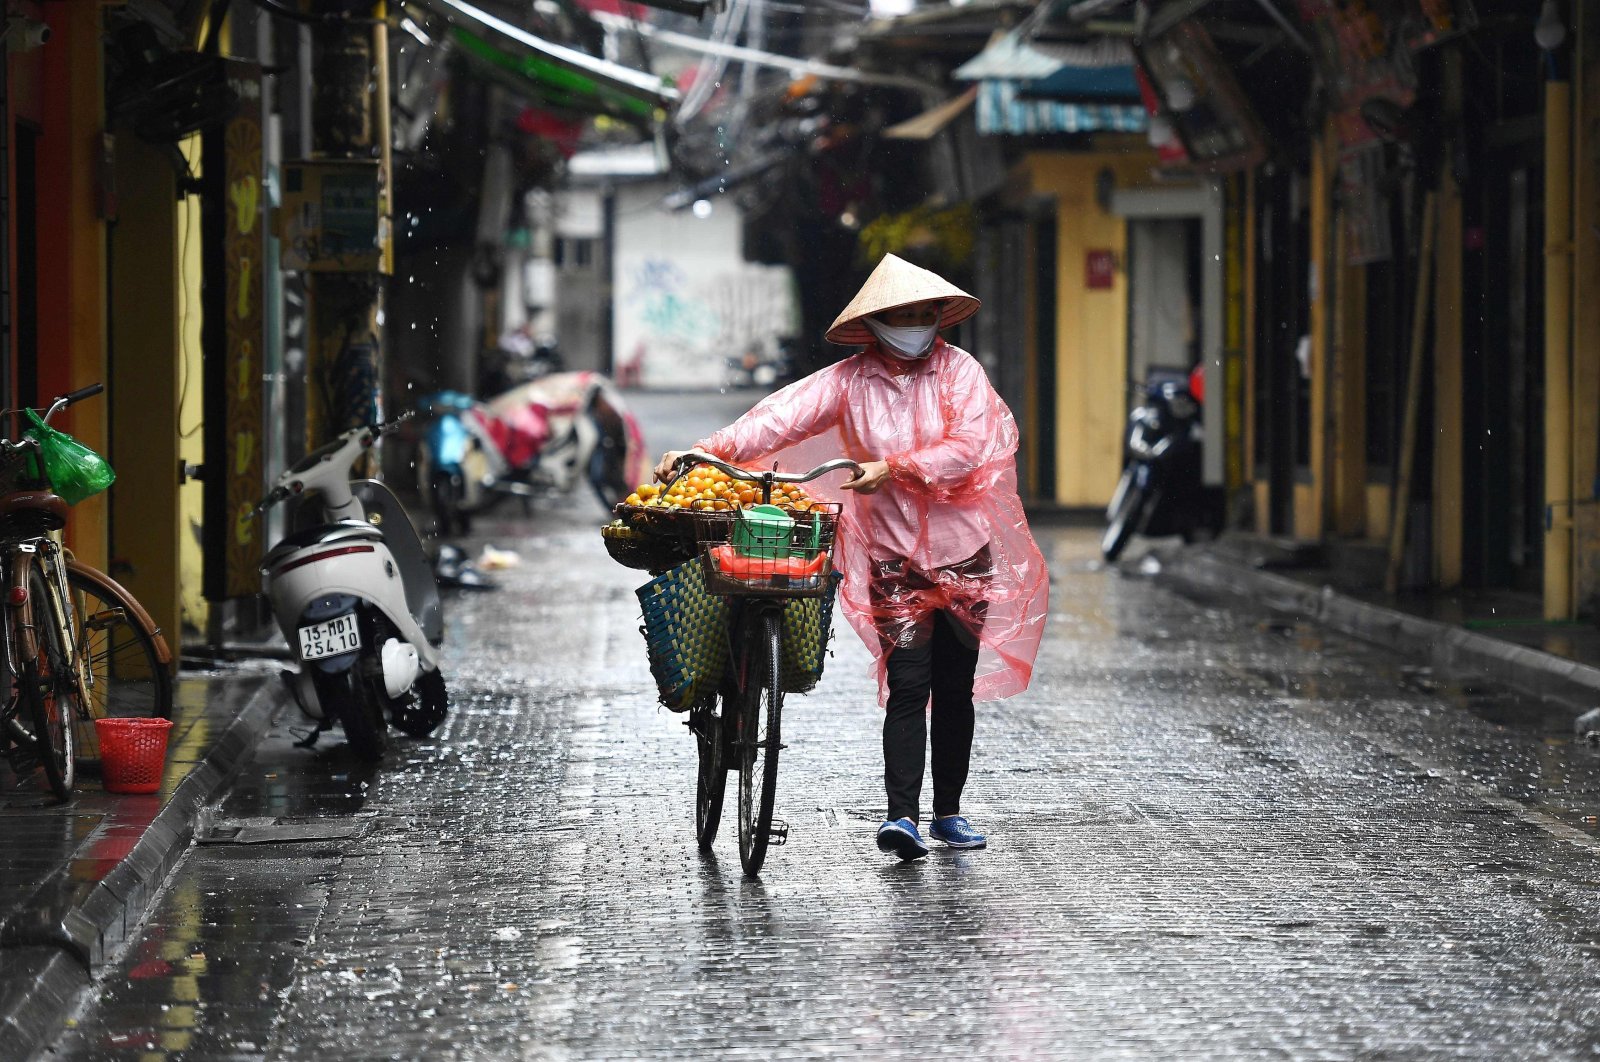 A fruit vendor wearing a face mask walks on a street in Hanoi, Vietnam, April 23, 2020. (AFP Photo)